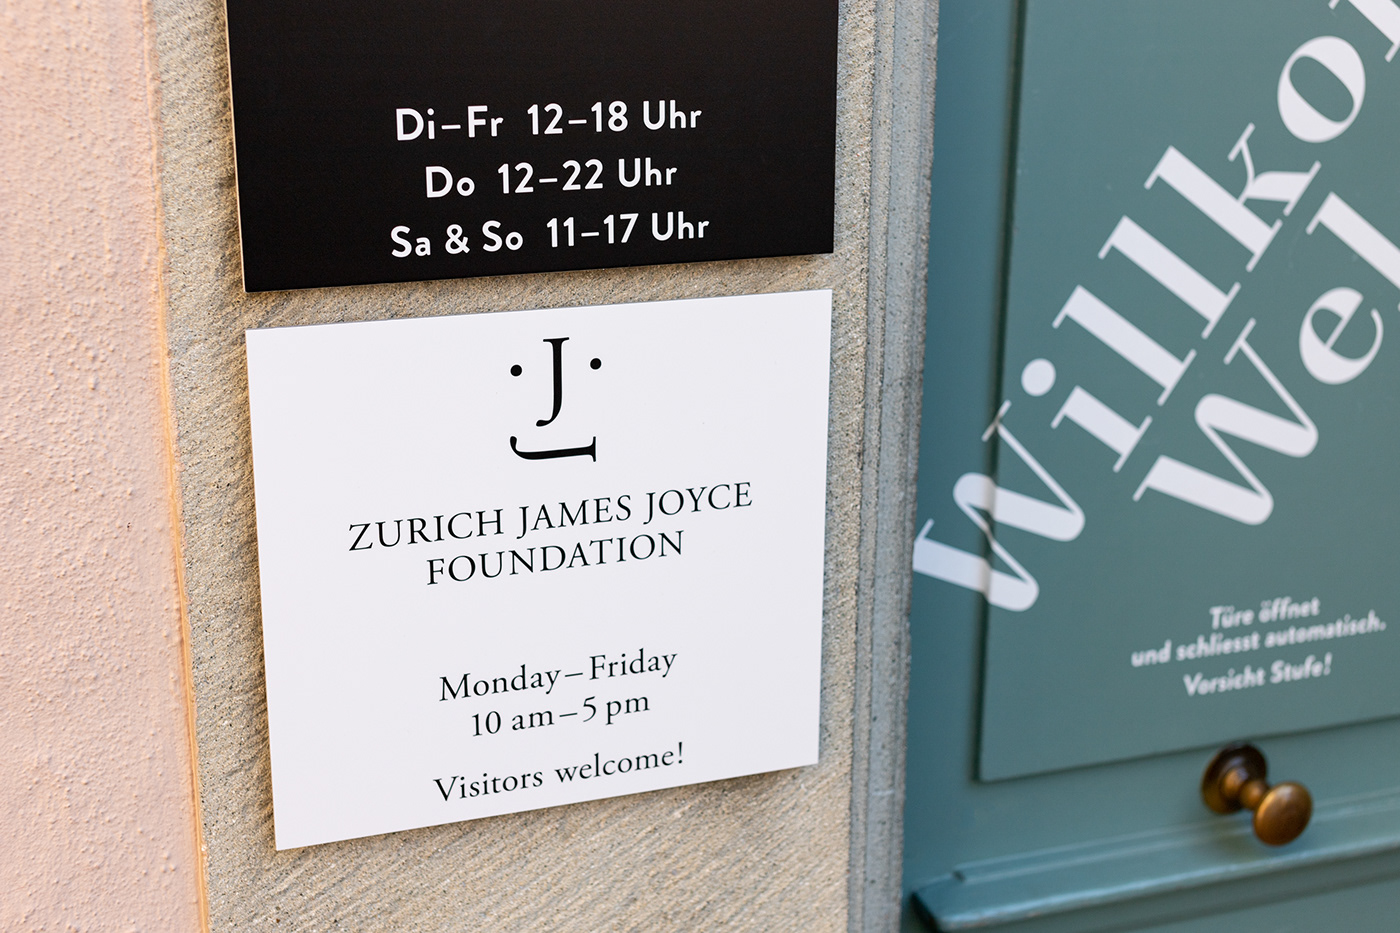 Zurich James Joyce Foundation